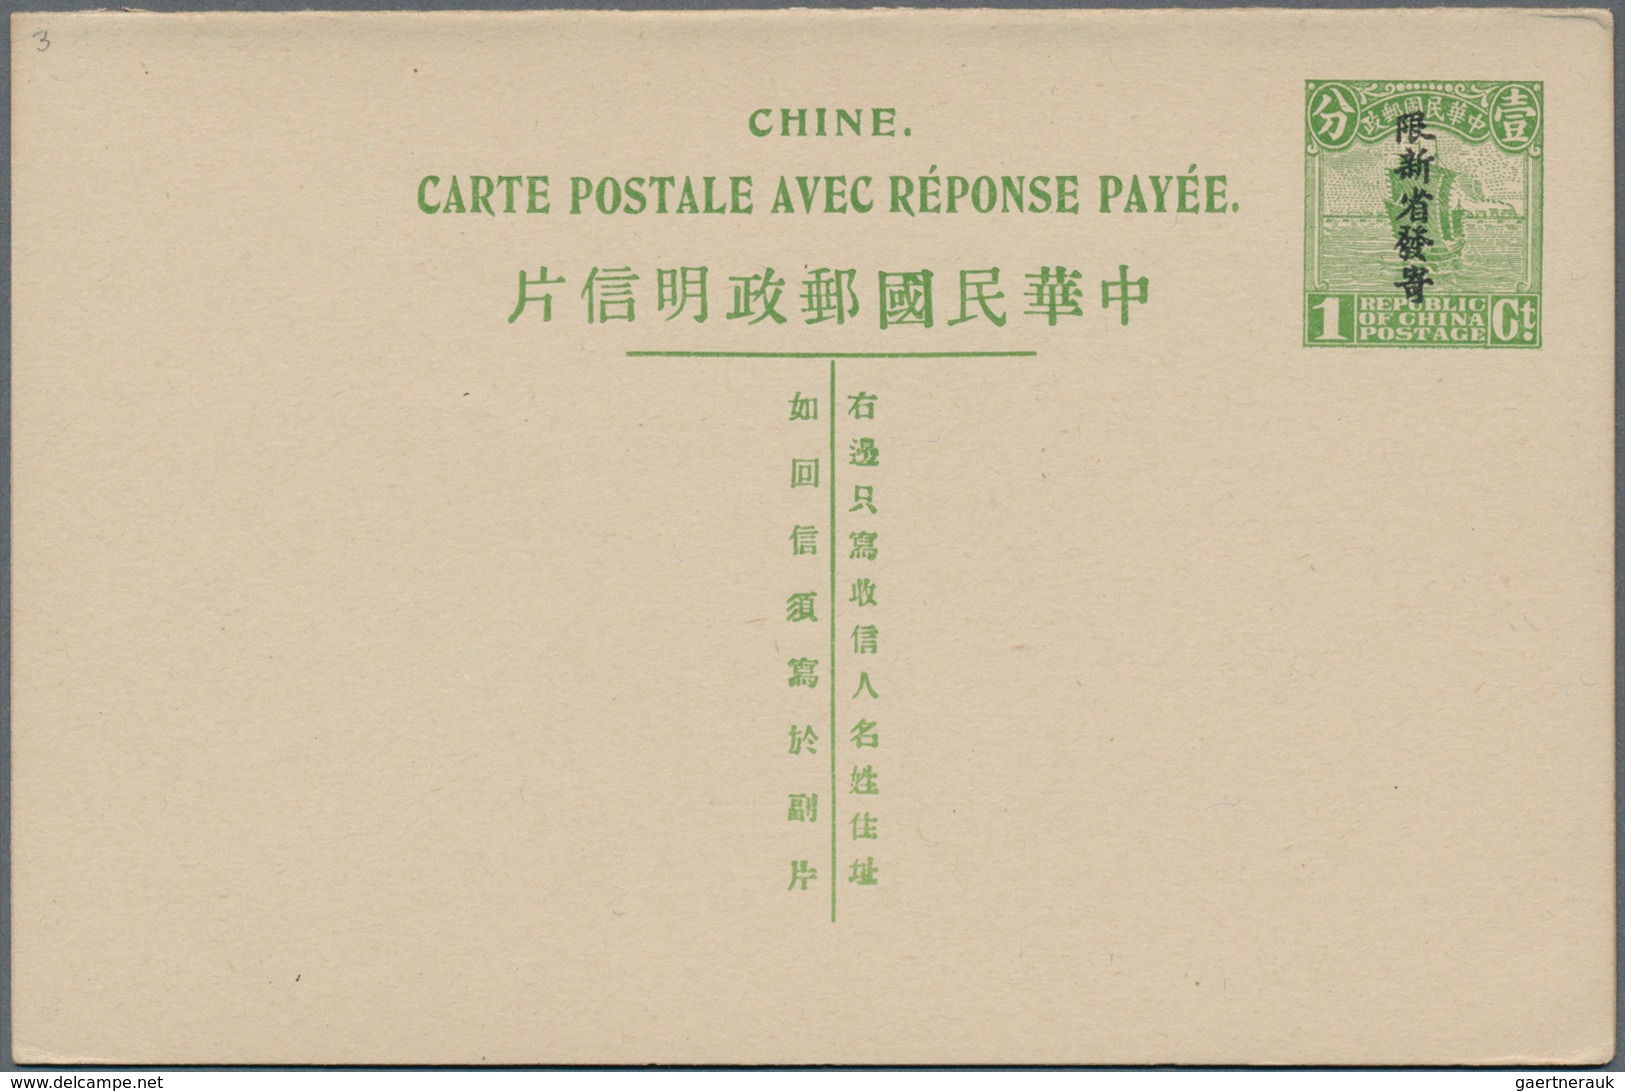 22413 China - Ganzsachen: 1897/1926 (ca.), mint lot stationery inc. ICP 1 C., square dragon 1 C. resp. sam